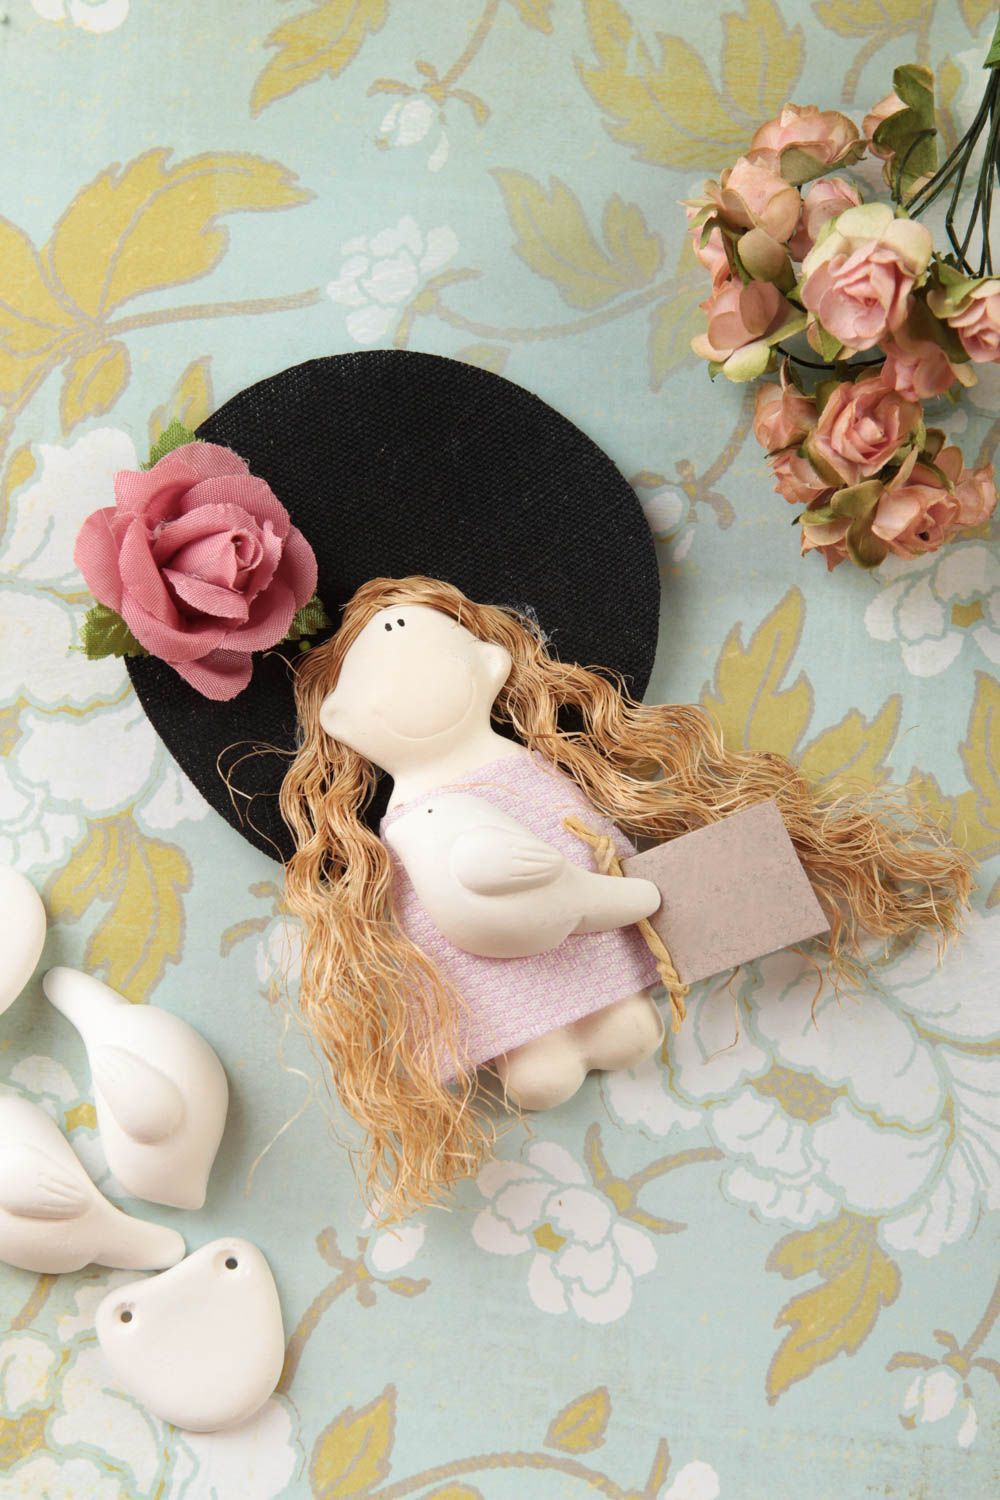 Handmade rag doll fabric interior toy room decor ideas decorative use only photo 1